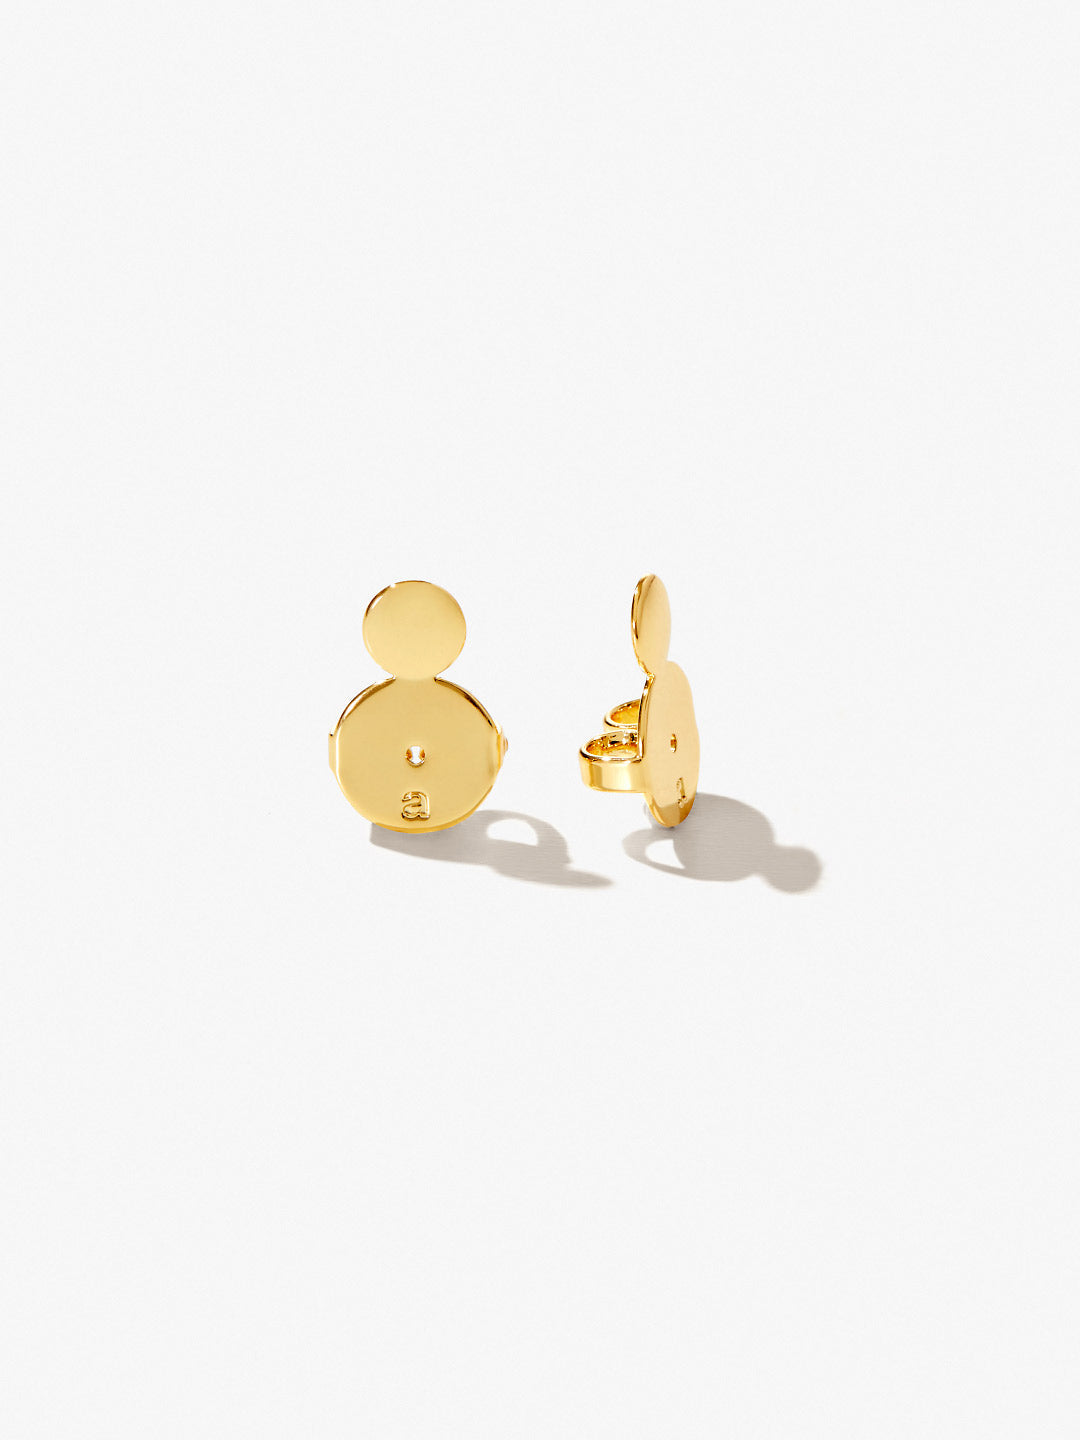 Ana Luisa Jewelry Accessories Earrings Backs Earring Back Lifters Gold